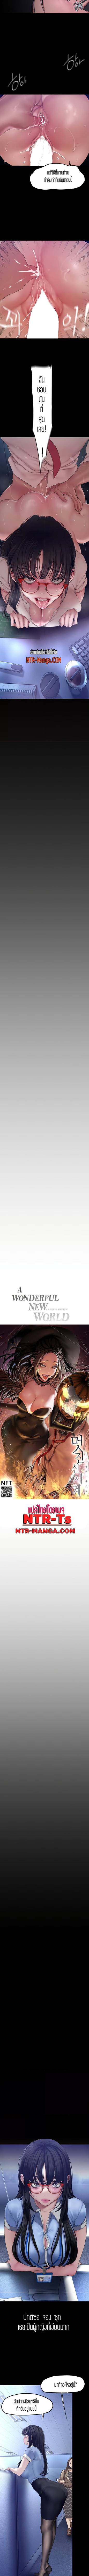 A Wonderful New World2